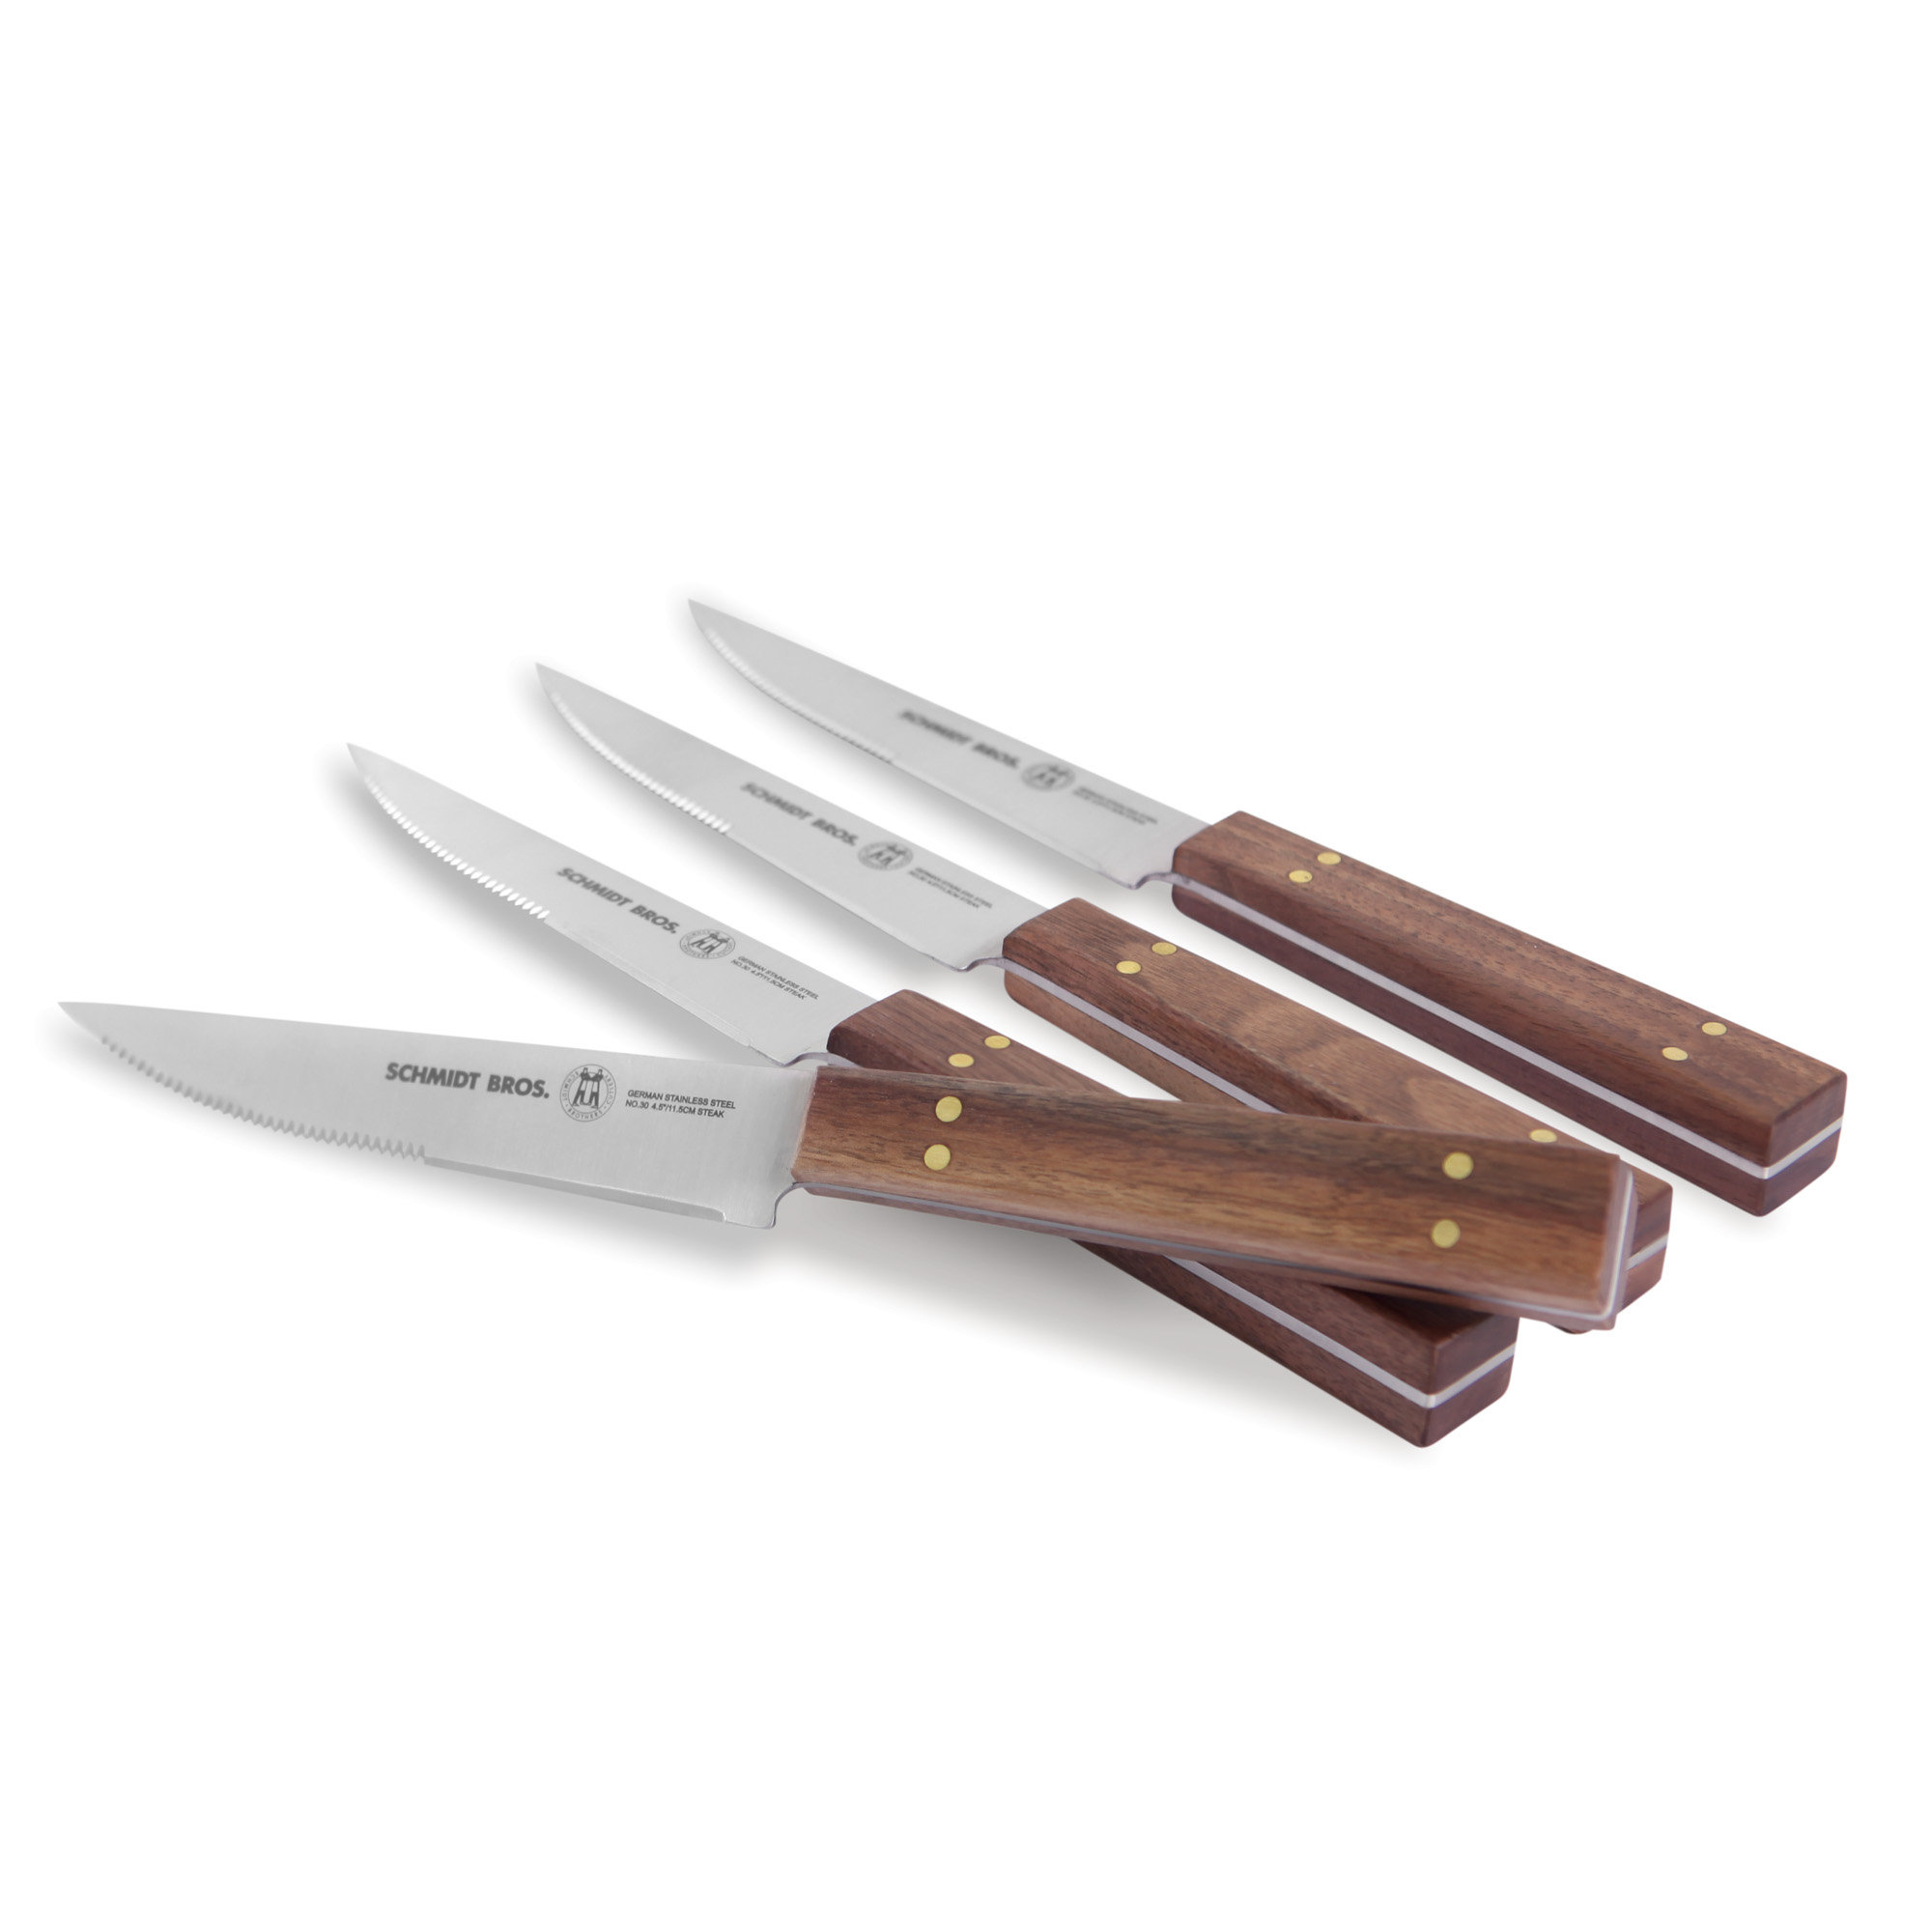 Schmidt Brothers Cutlery Bonded Ash 4pc Jumbo Steak Knife Set